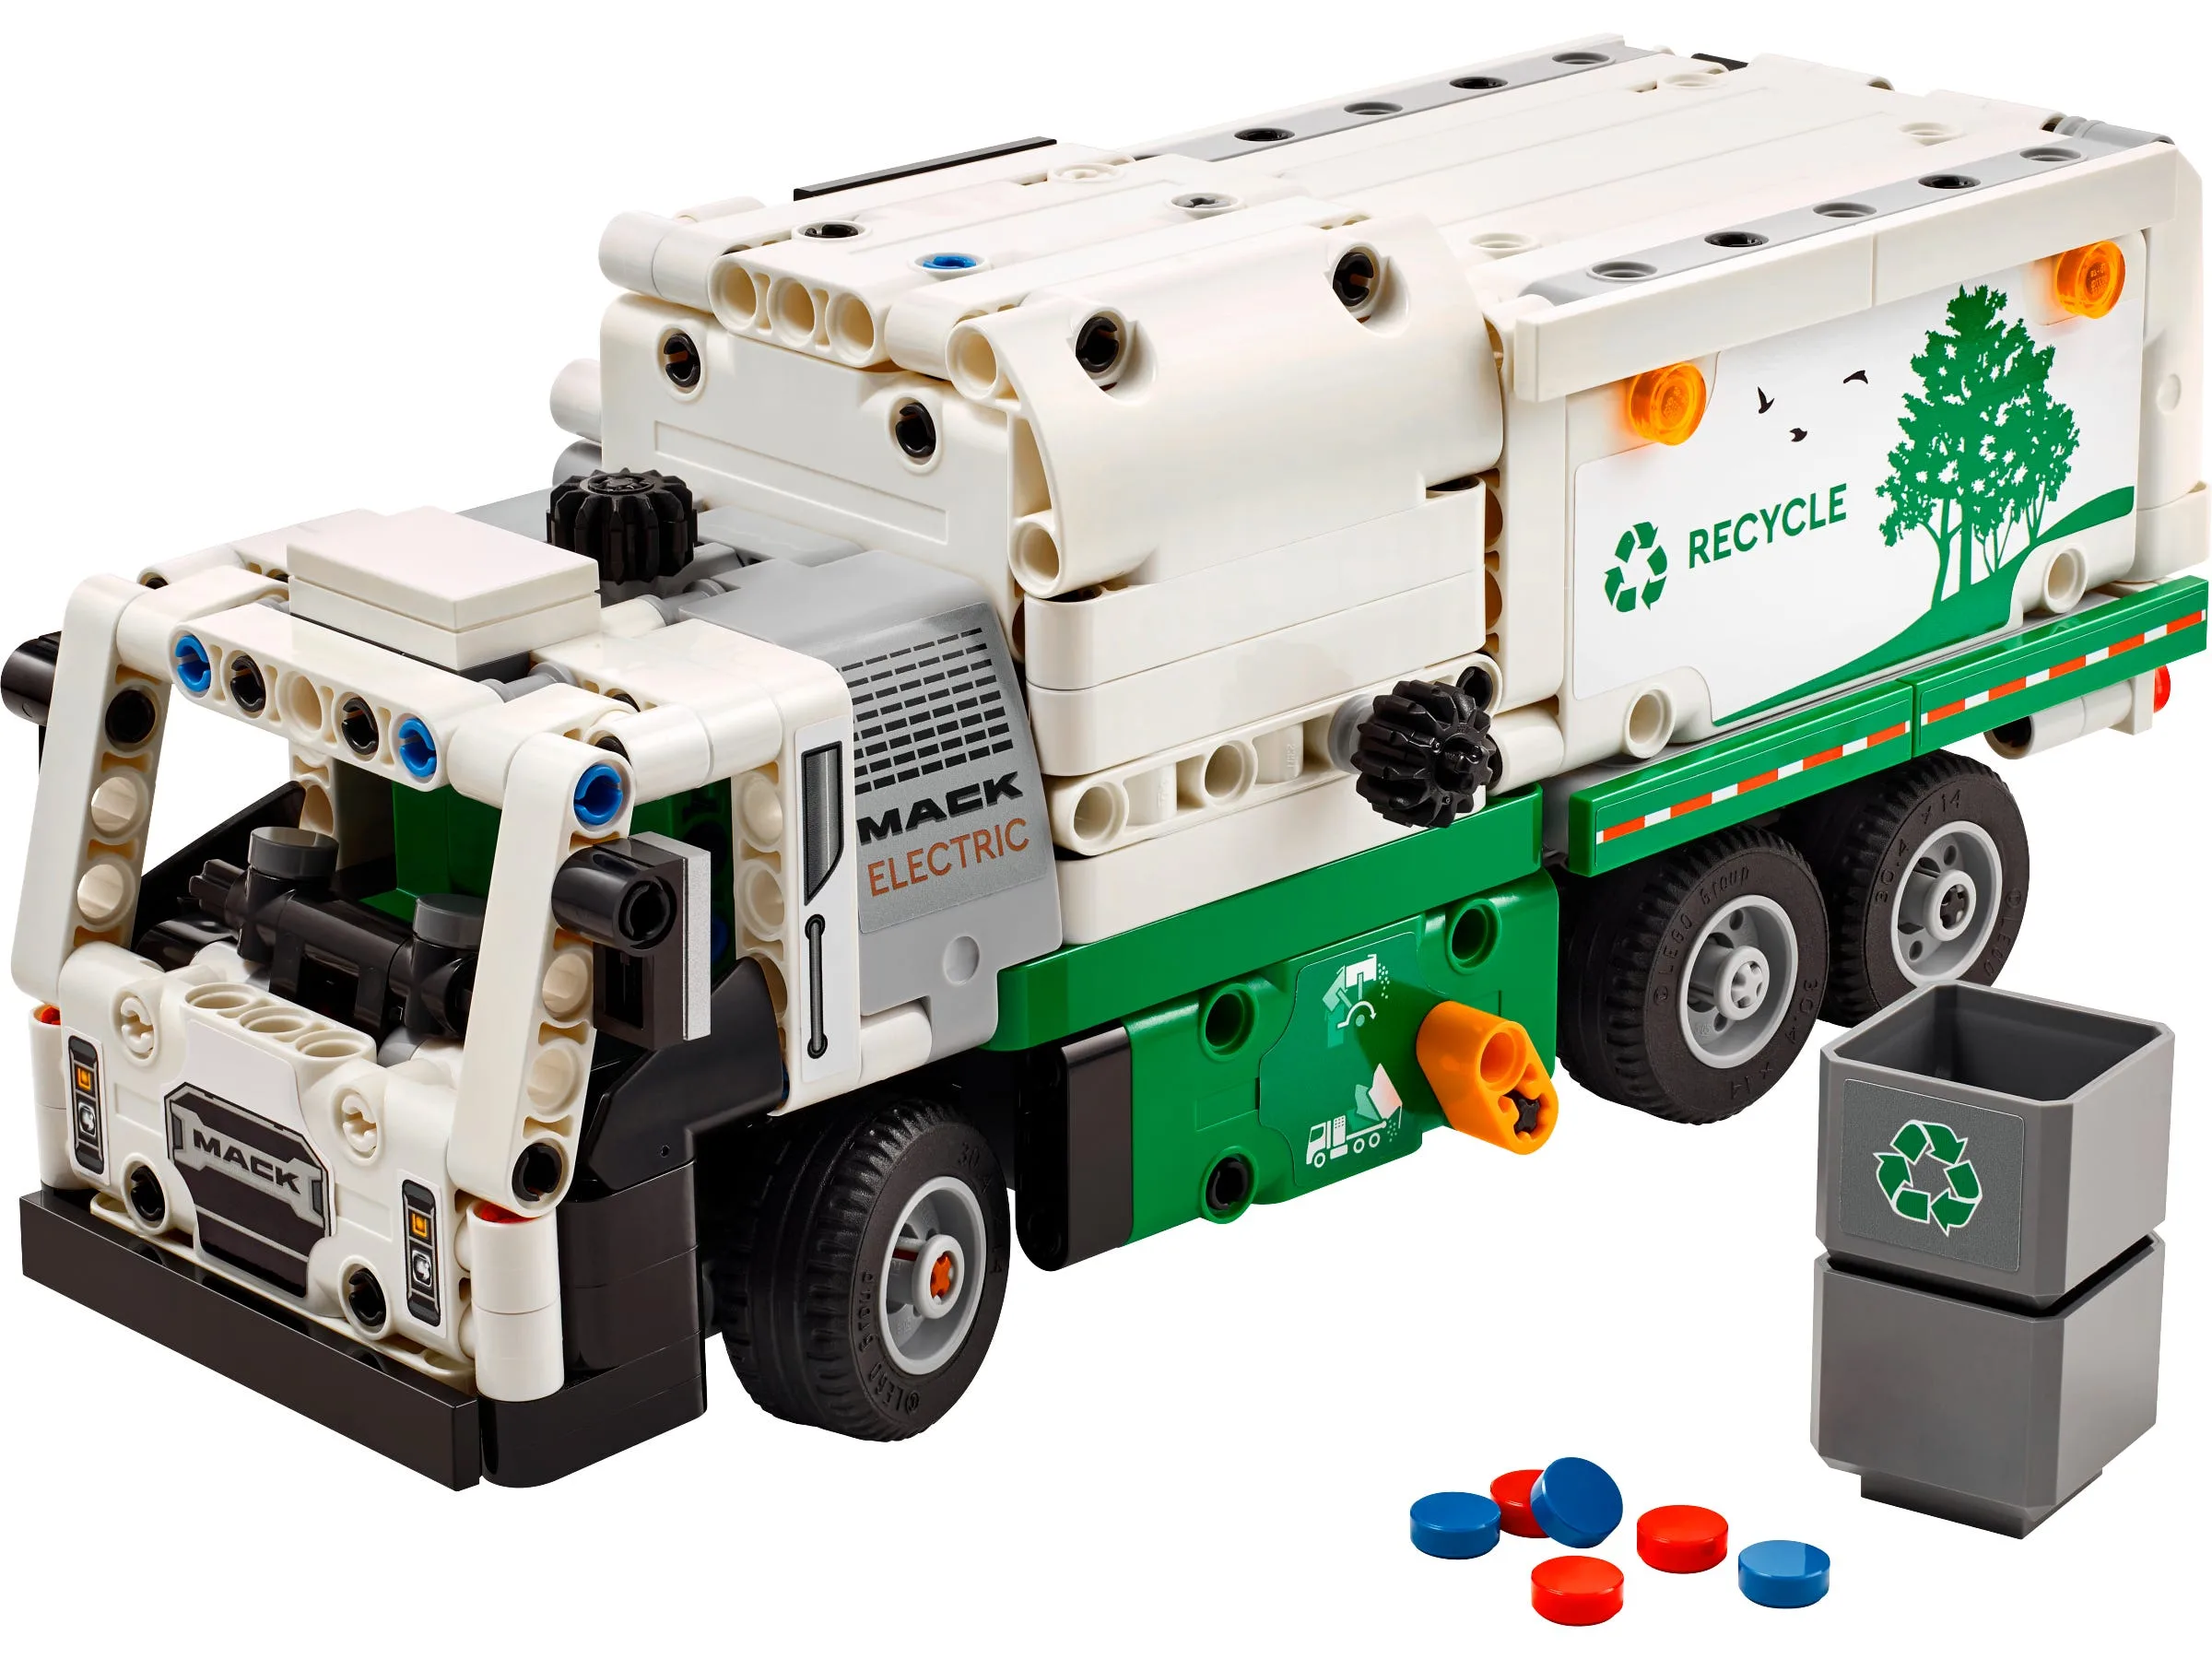 10 Ultimate LEGO Monster Truck Sets For Kids